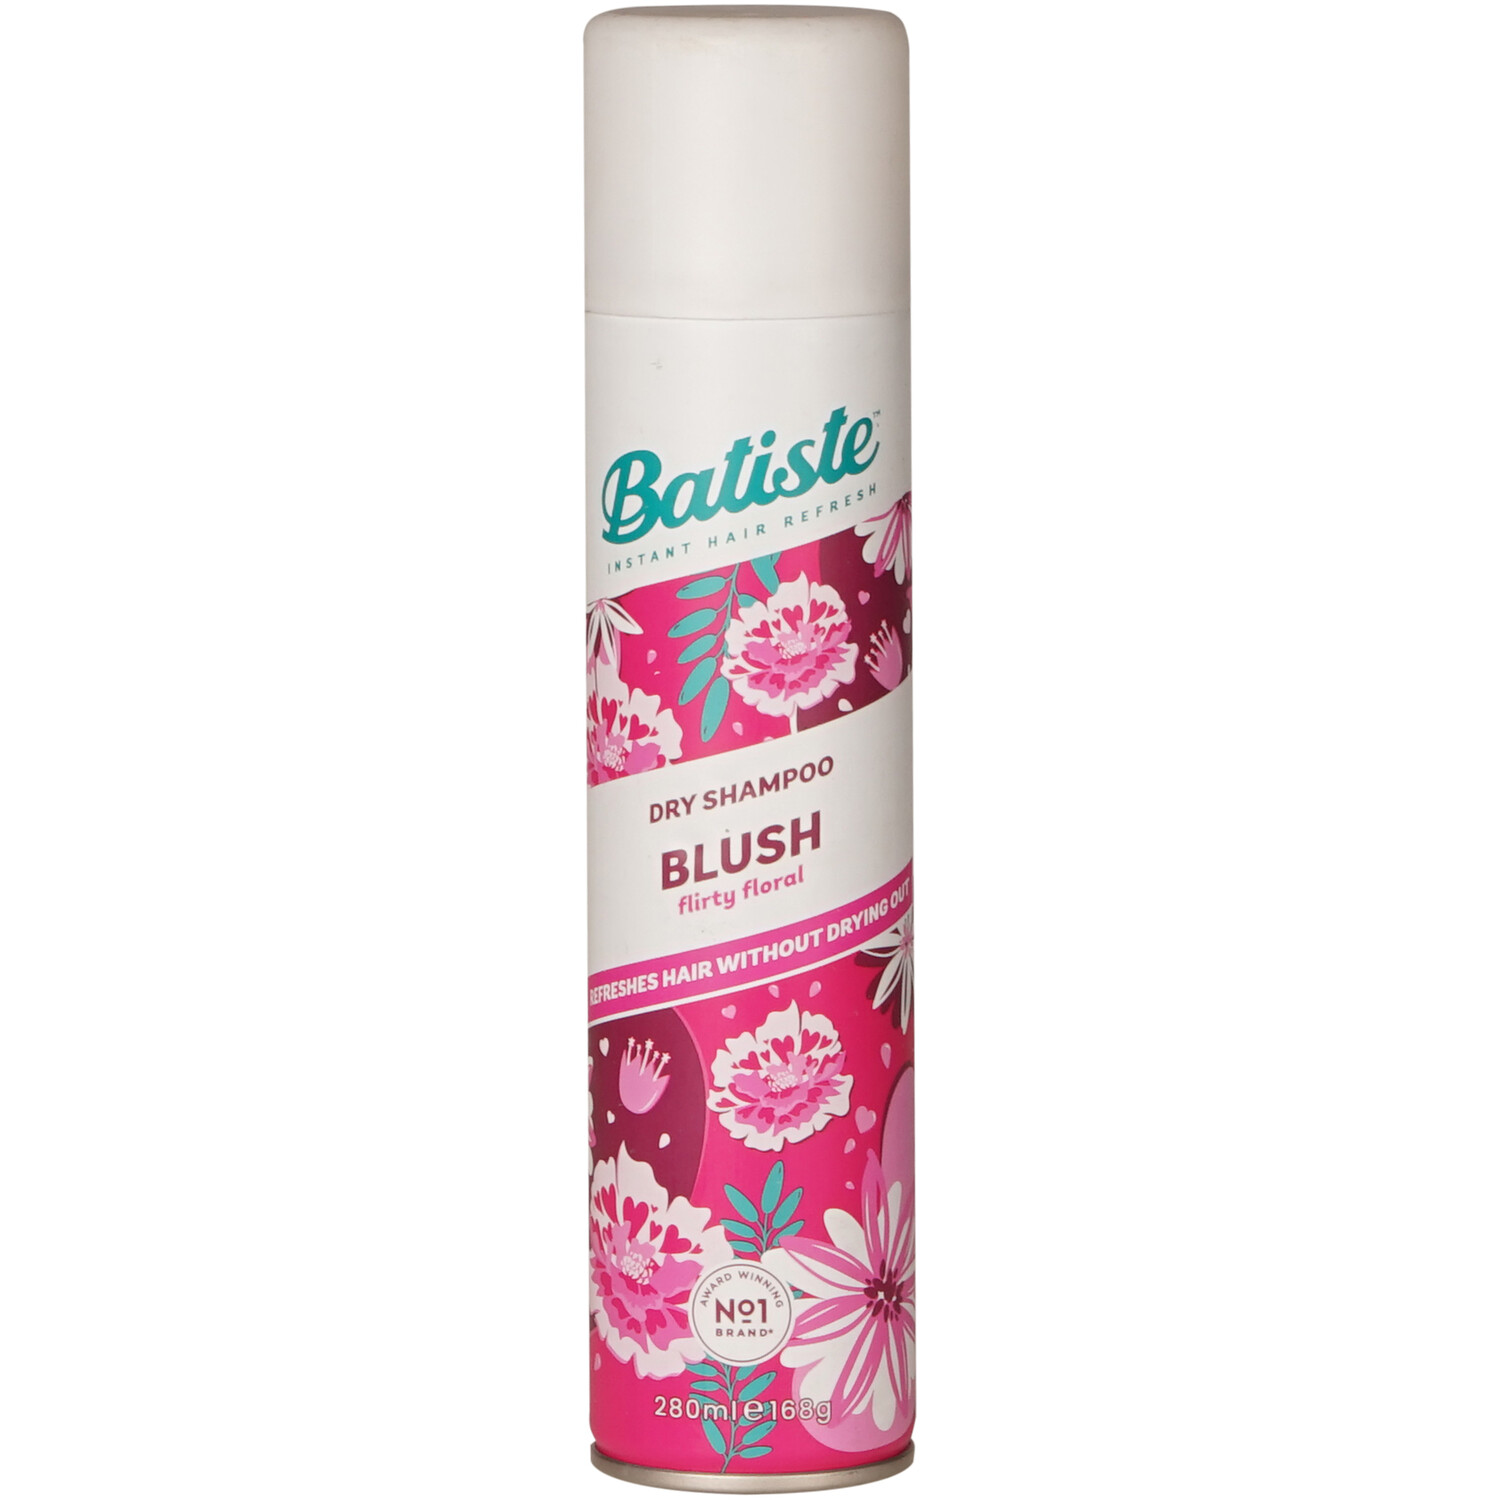 Batiste Blush Dry Shampoo 280ml Image